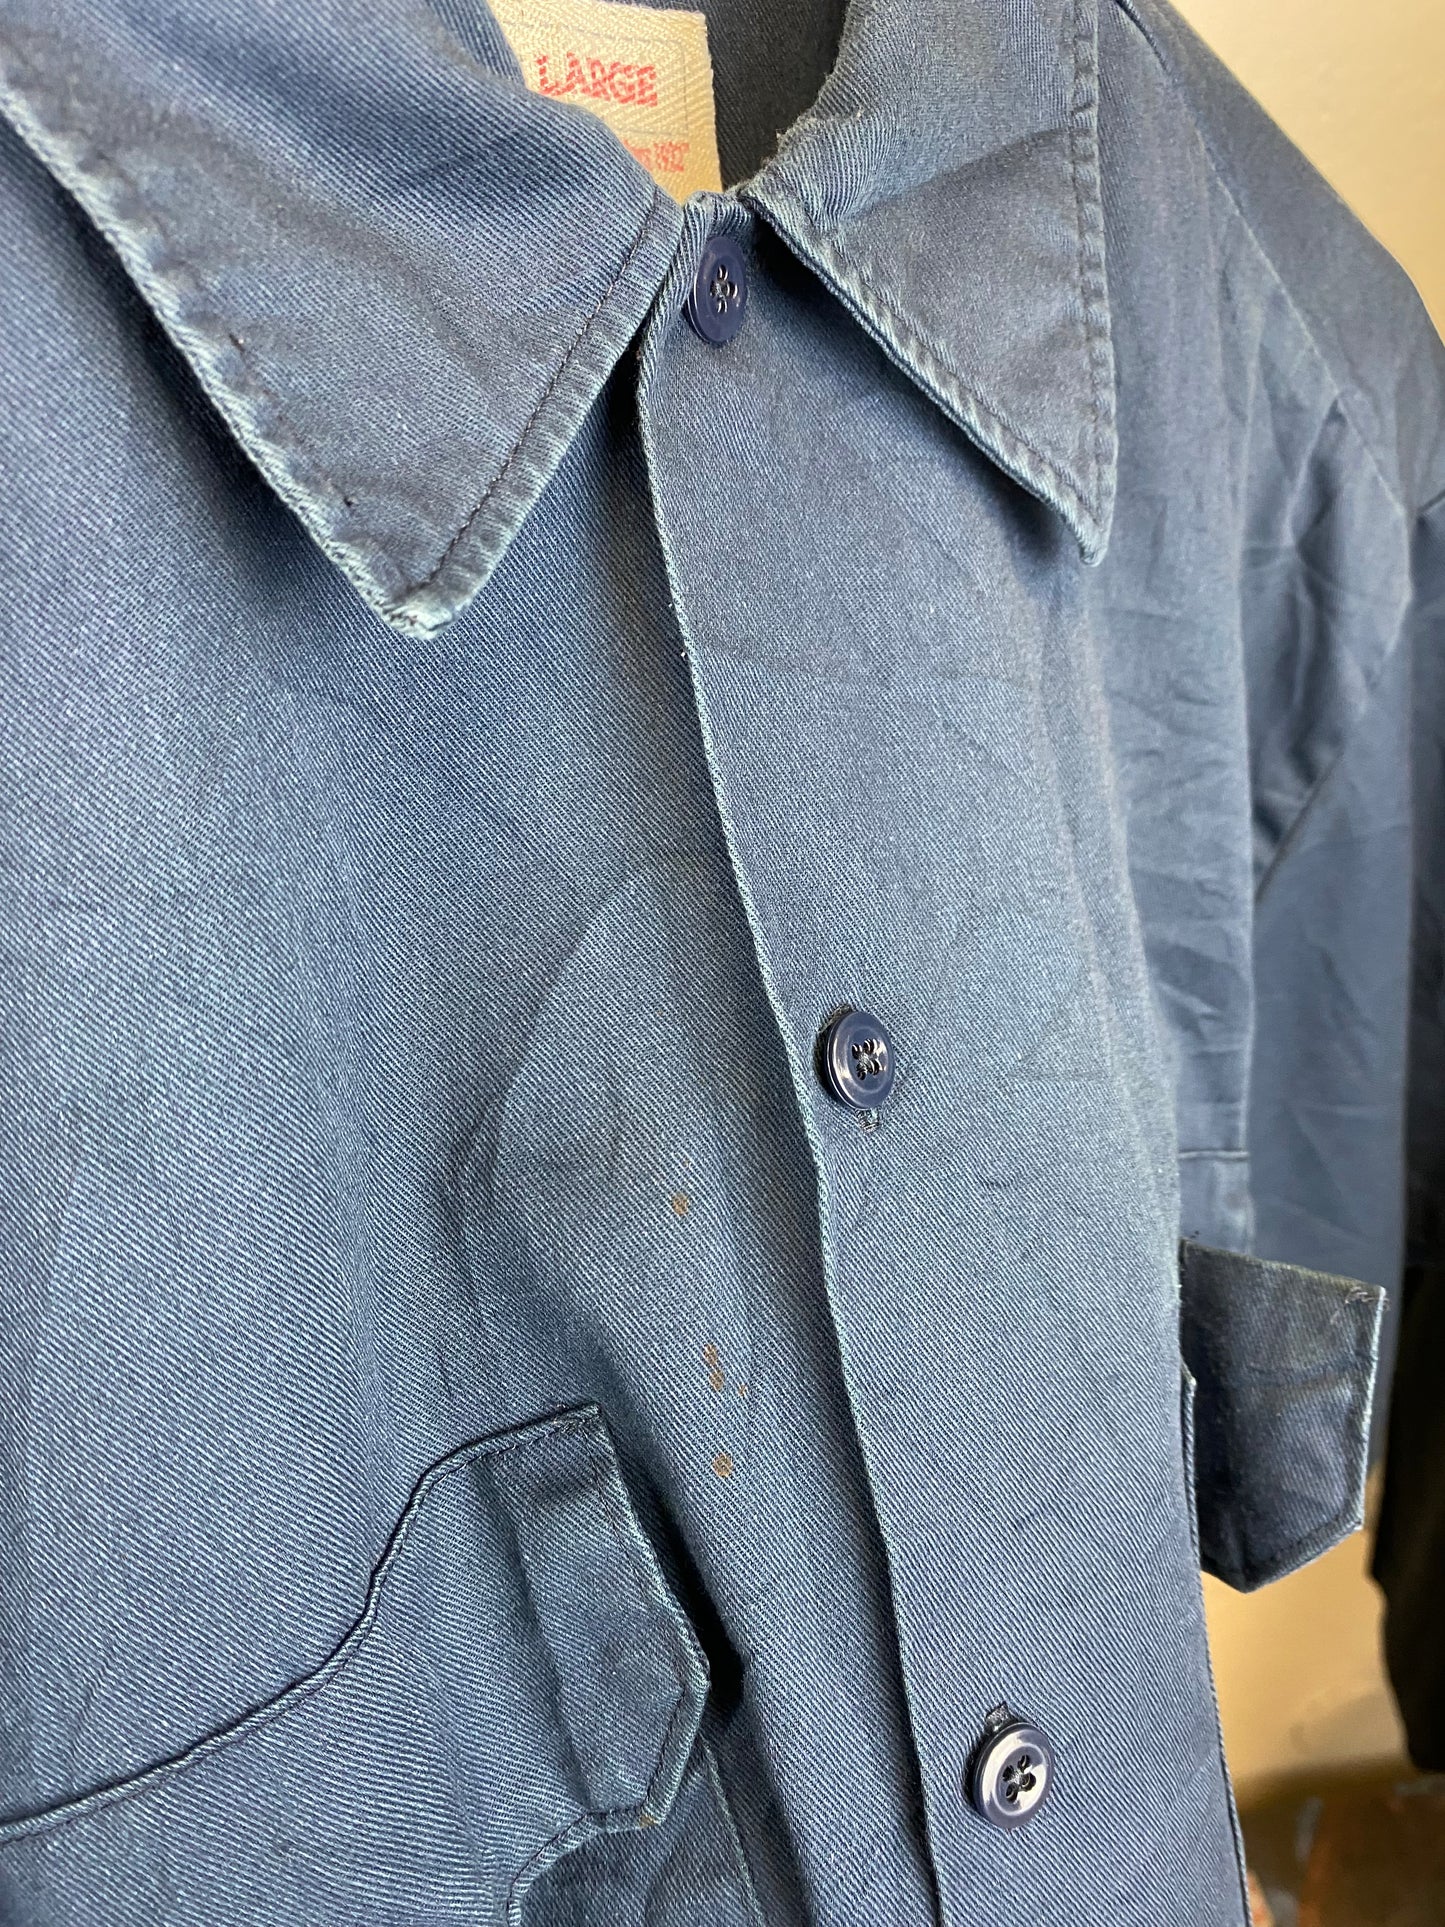 Vintage Dickies Short Sleeve Shirt - size L